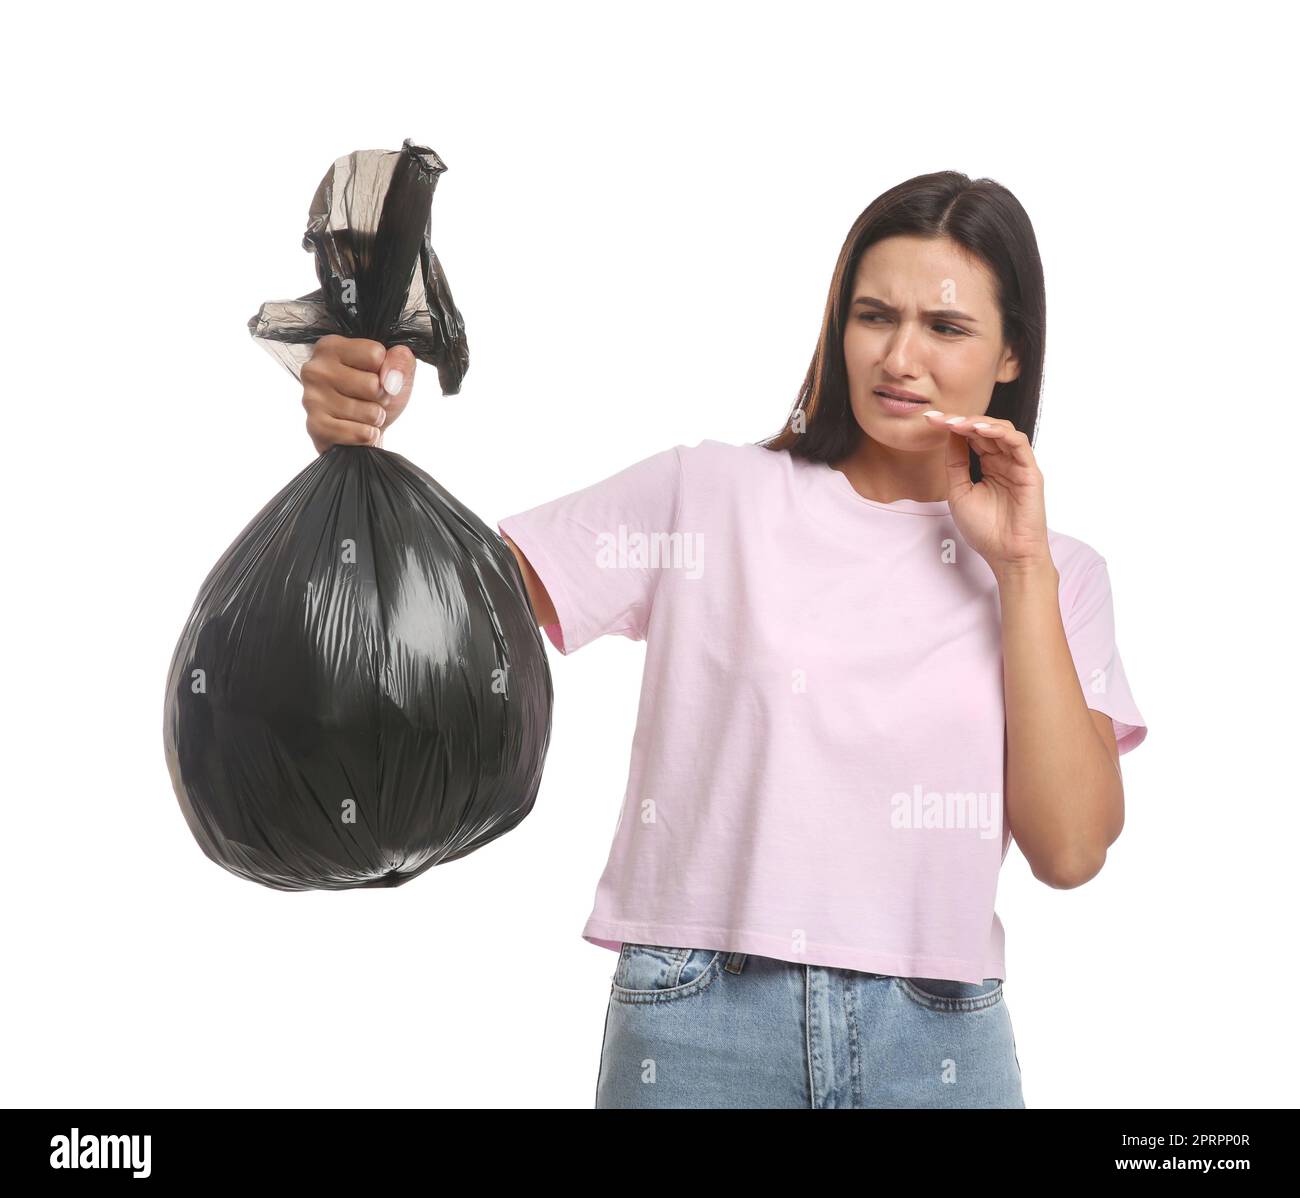 https://c8.alamy.com/comp/2PRPP0R/woman-holding-full-garbage-bag-on-white-background-2PRPP0R.jpg